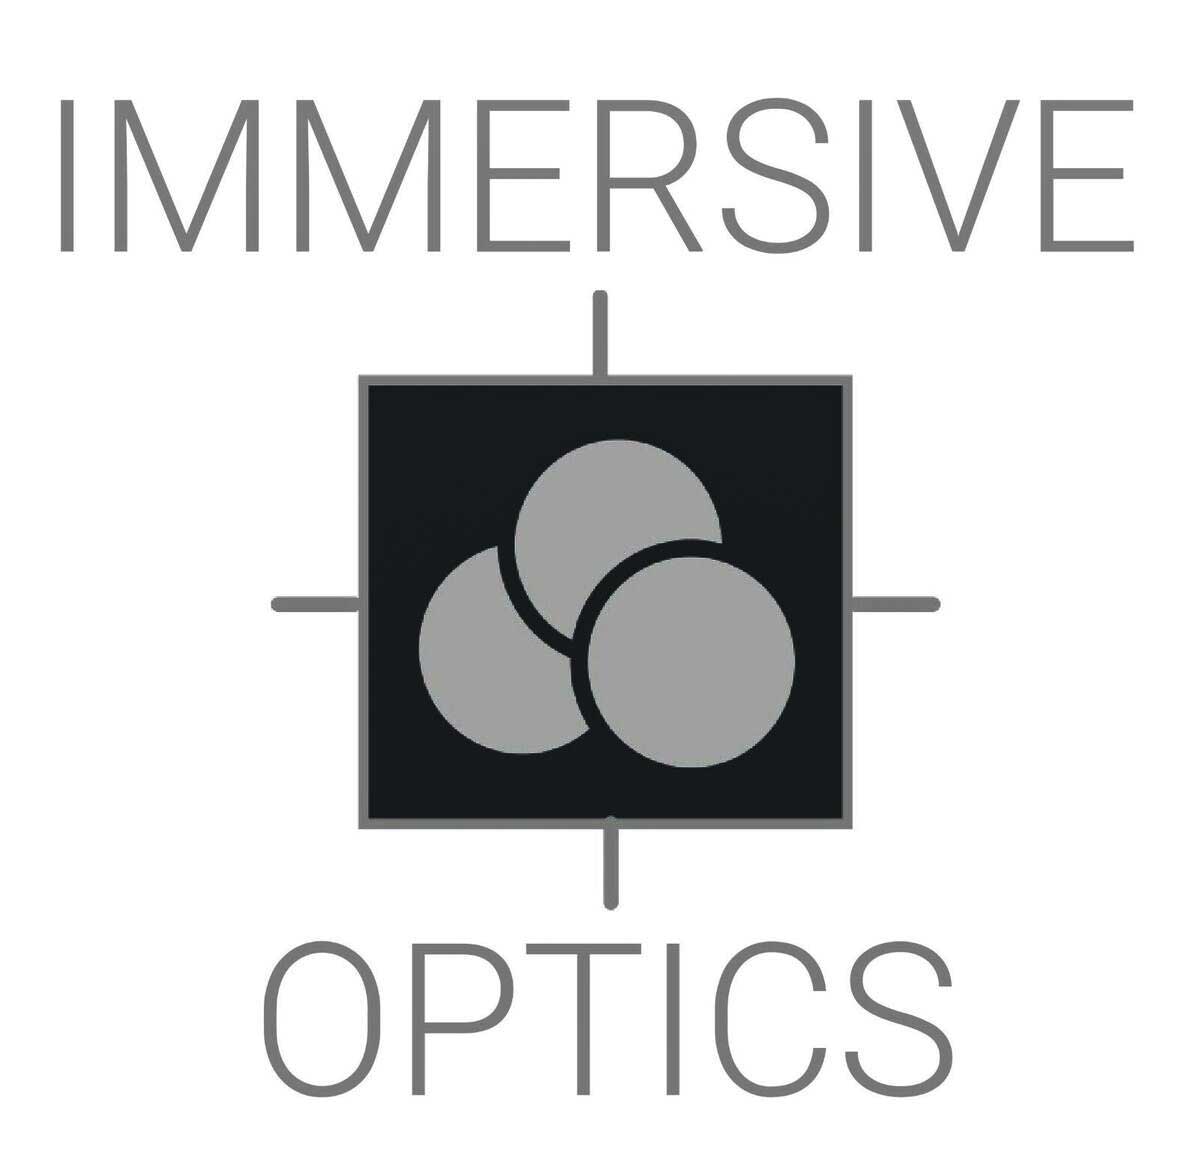 Immersive Optics